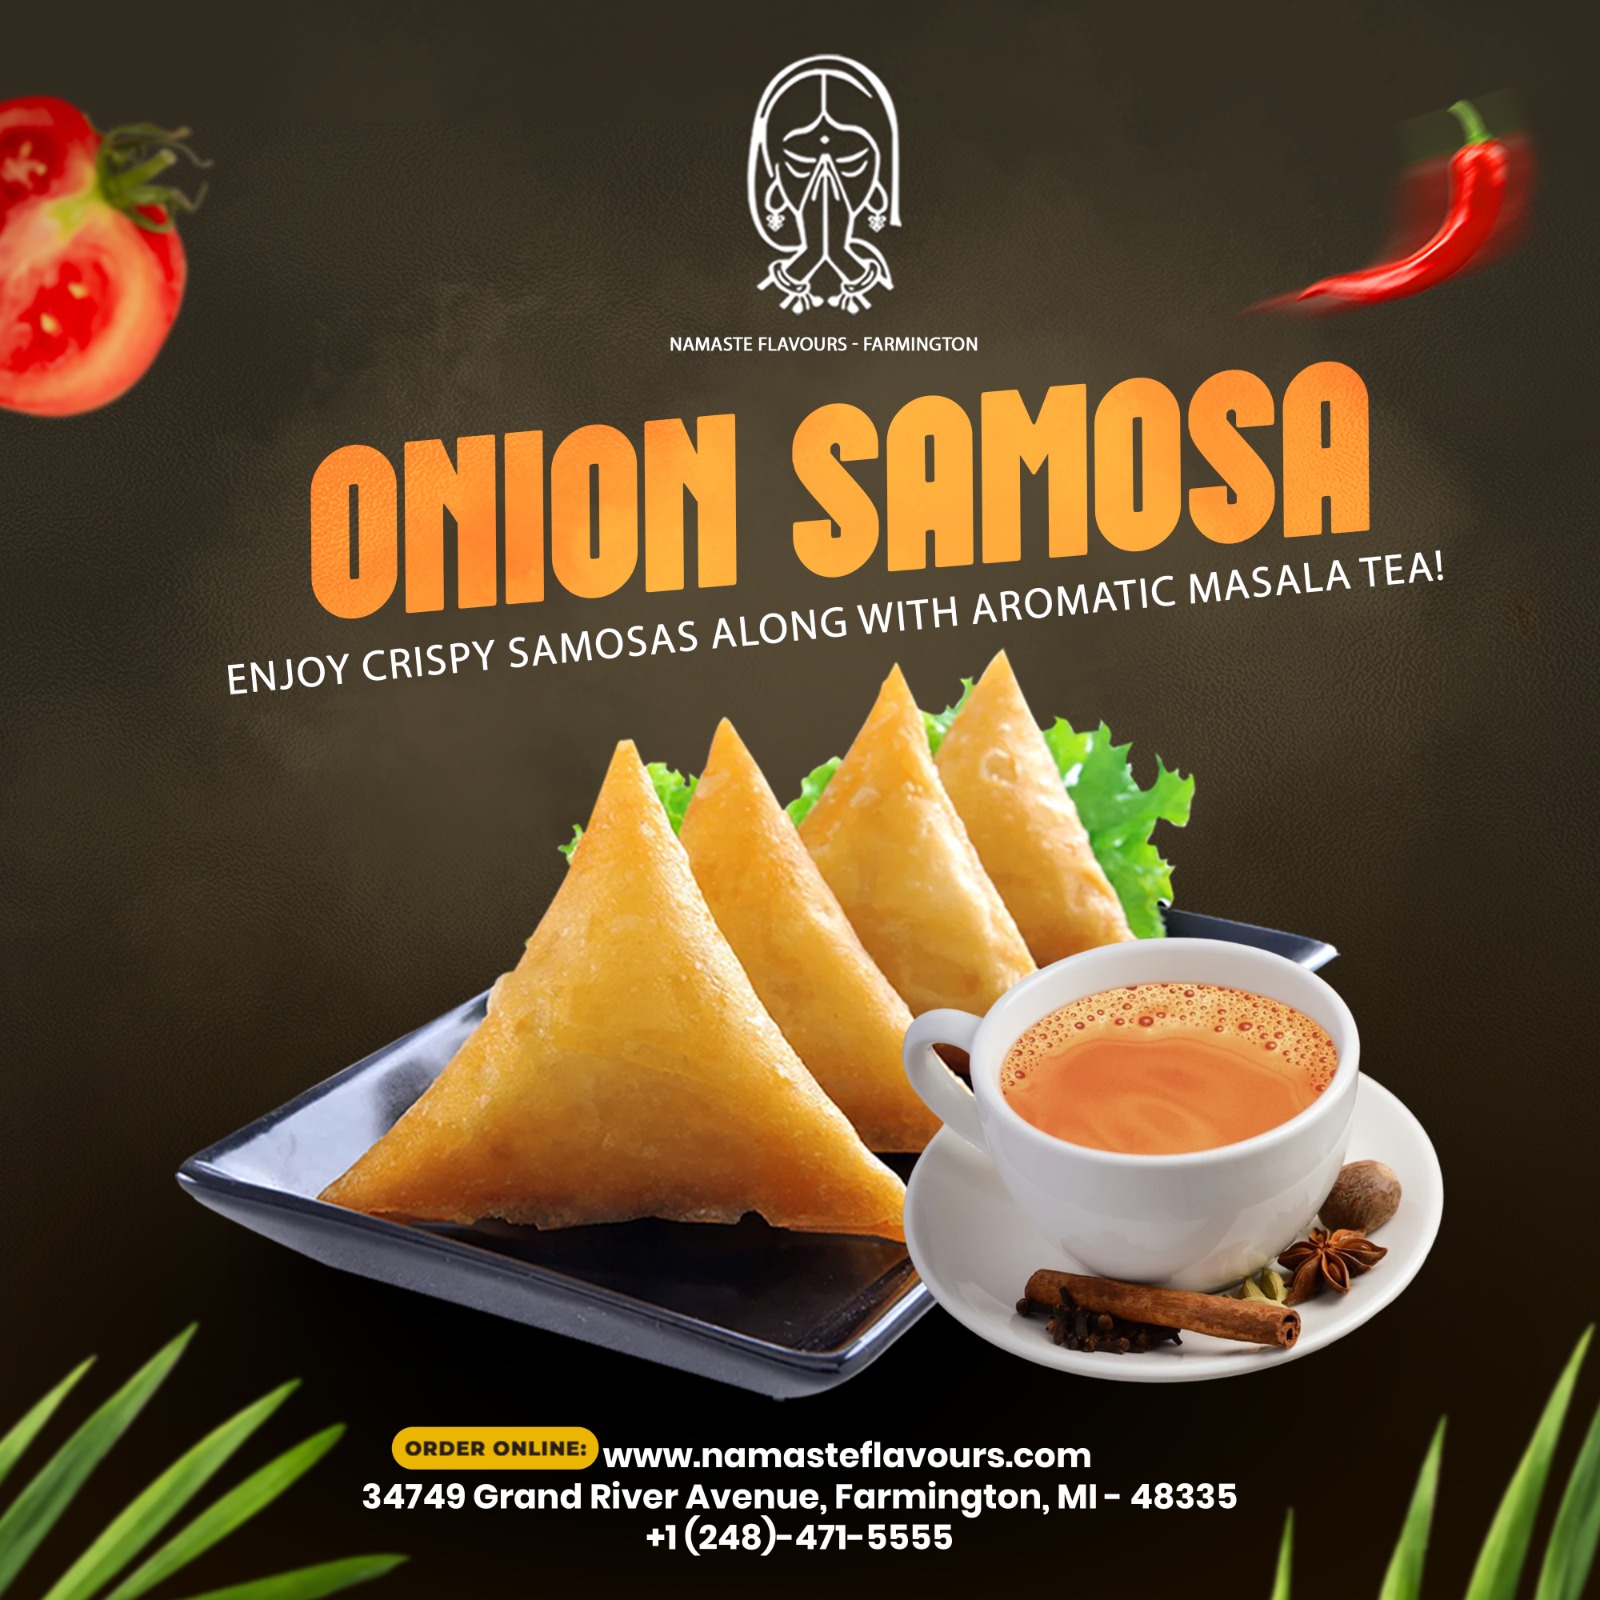 Enjoy Onion Samosas paired perfectly with aromatic Masala Tea! 